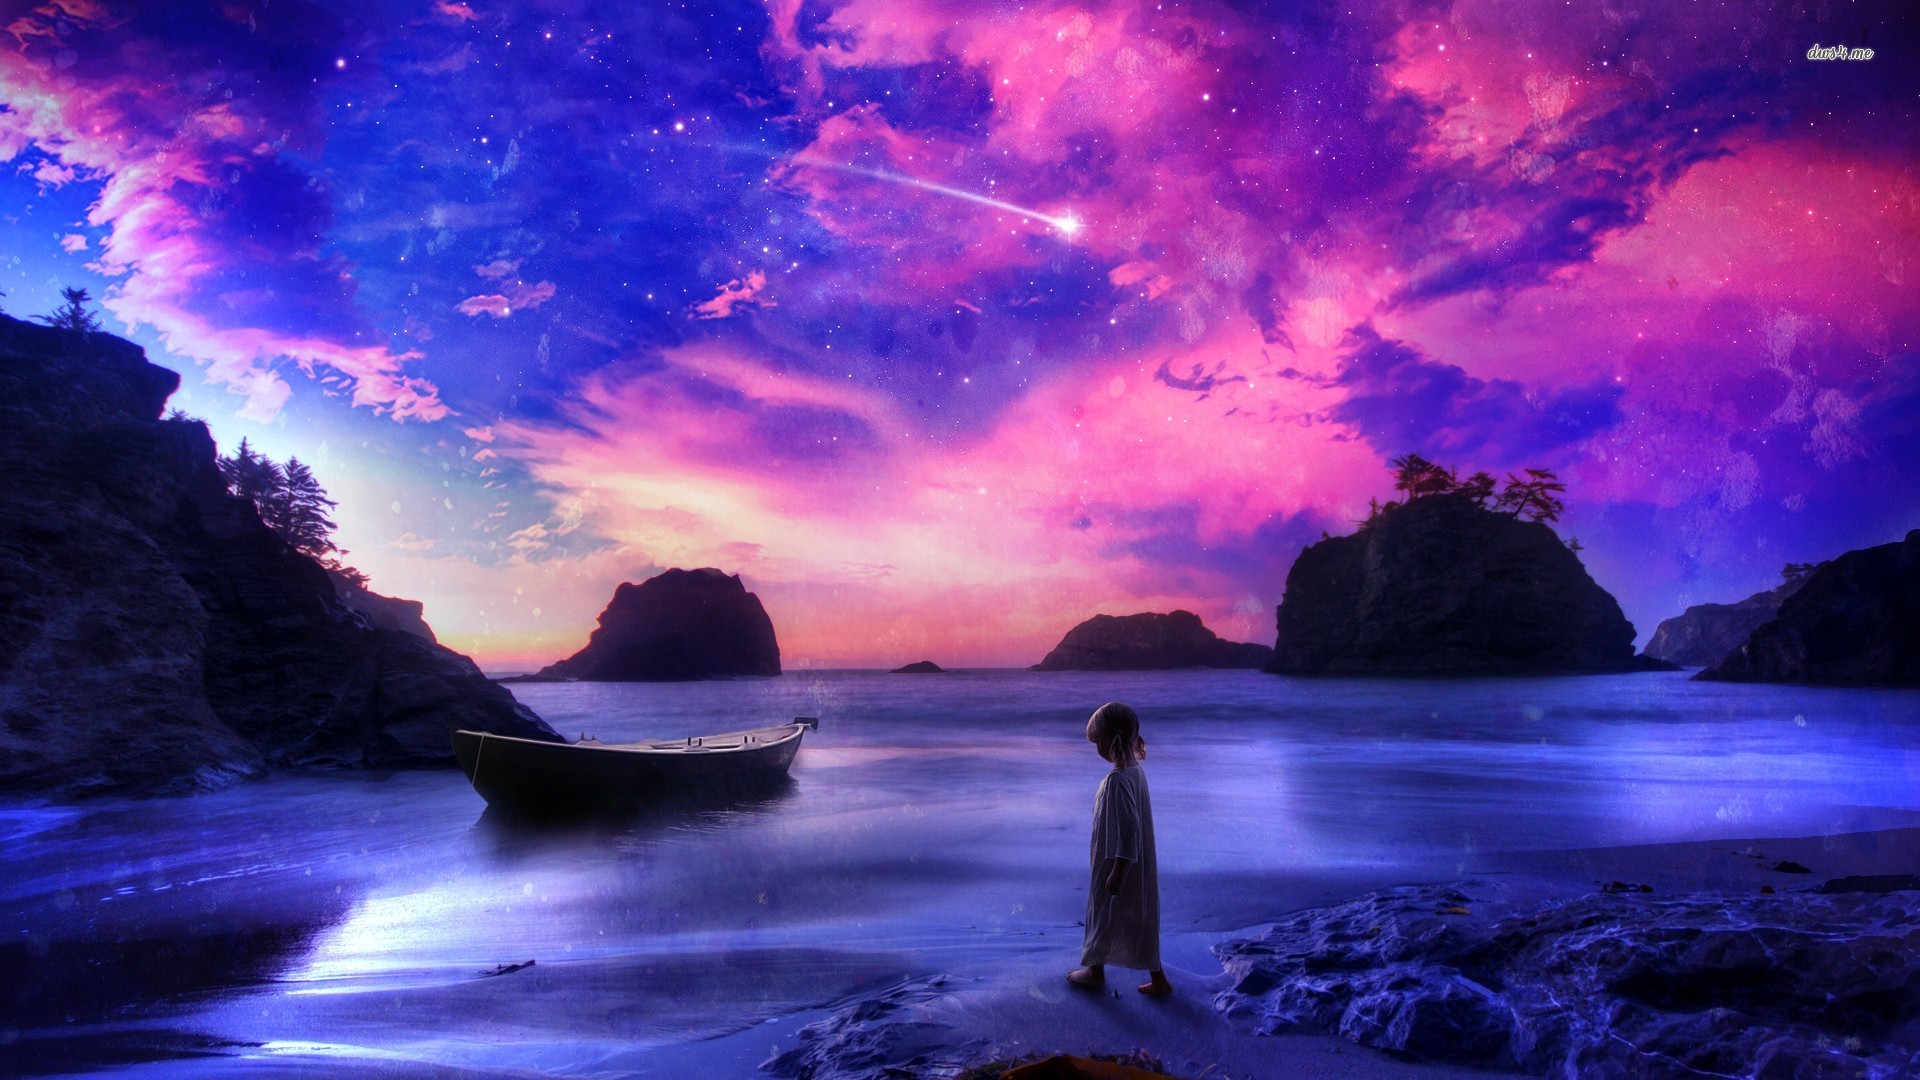 anime stars wallpaper,himmel,natur,natürliche landschaft,meer,ozean